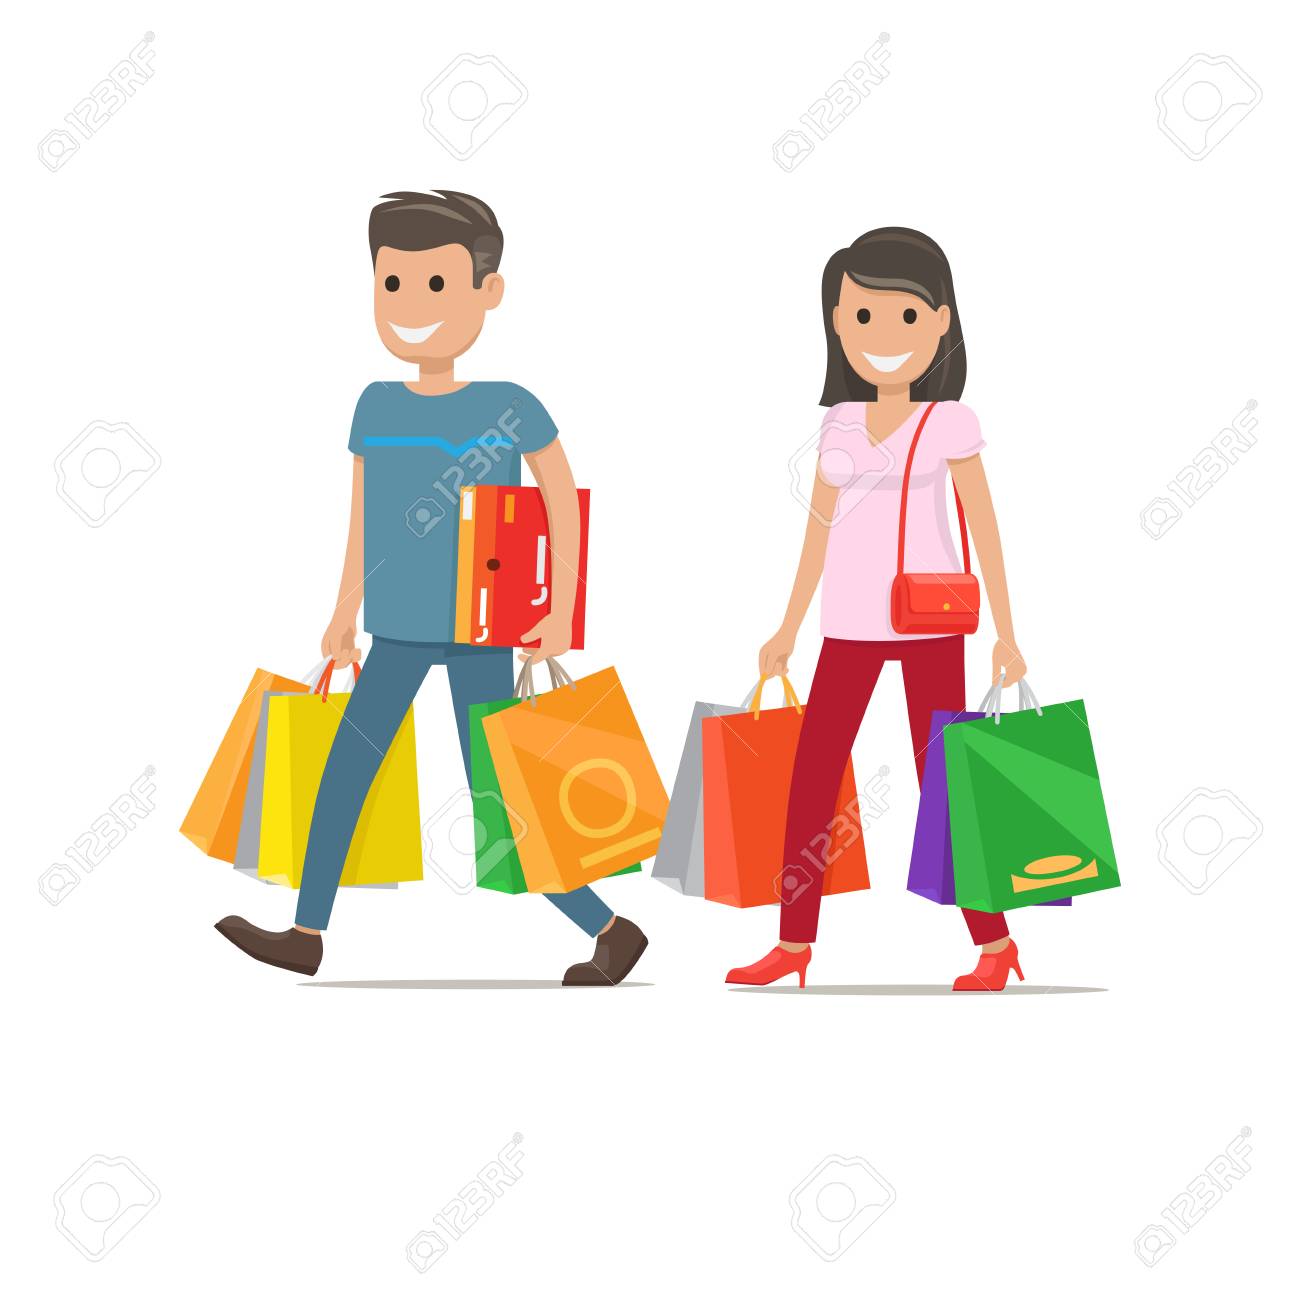 They go shopping days go. Cartoon шоппинг. Шоппинг рисунок. Поход по магазинам. Иллюстрация пара с покупками.